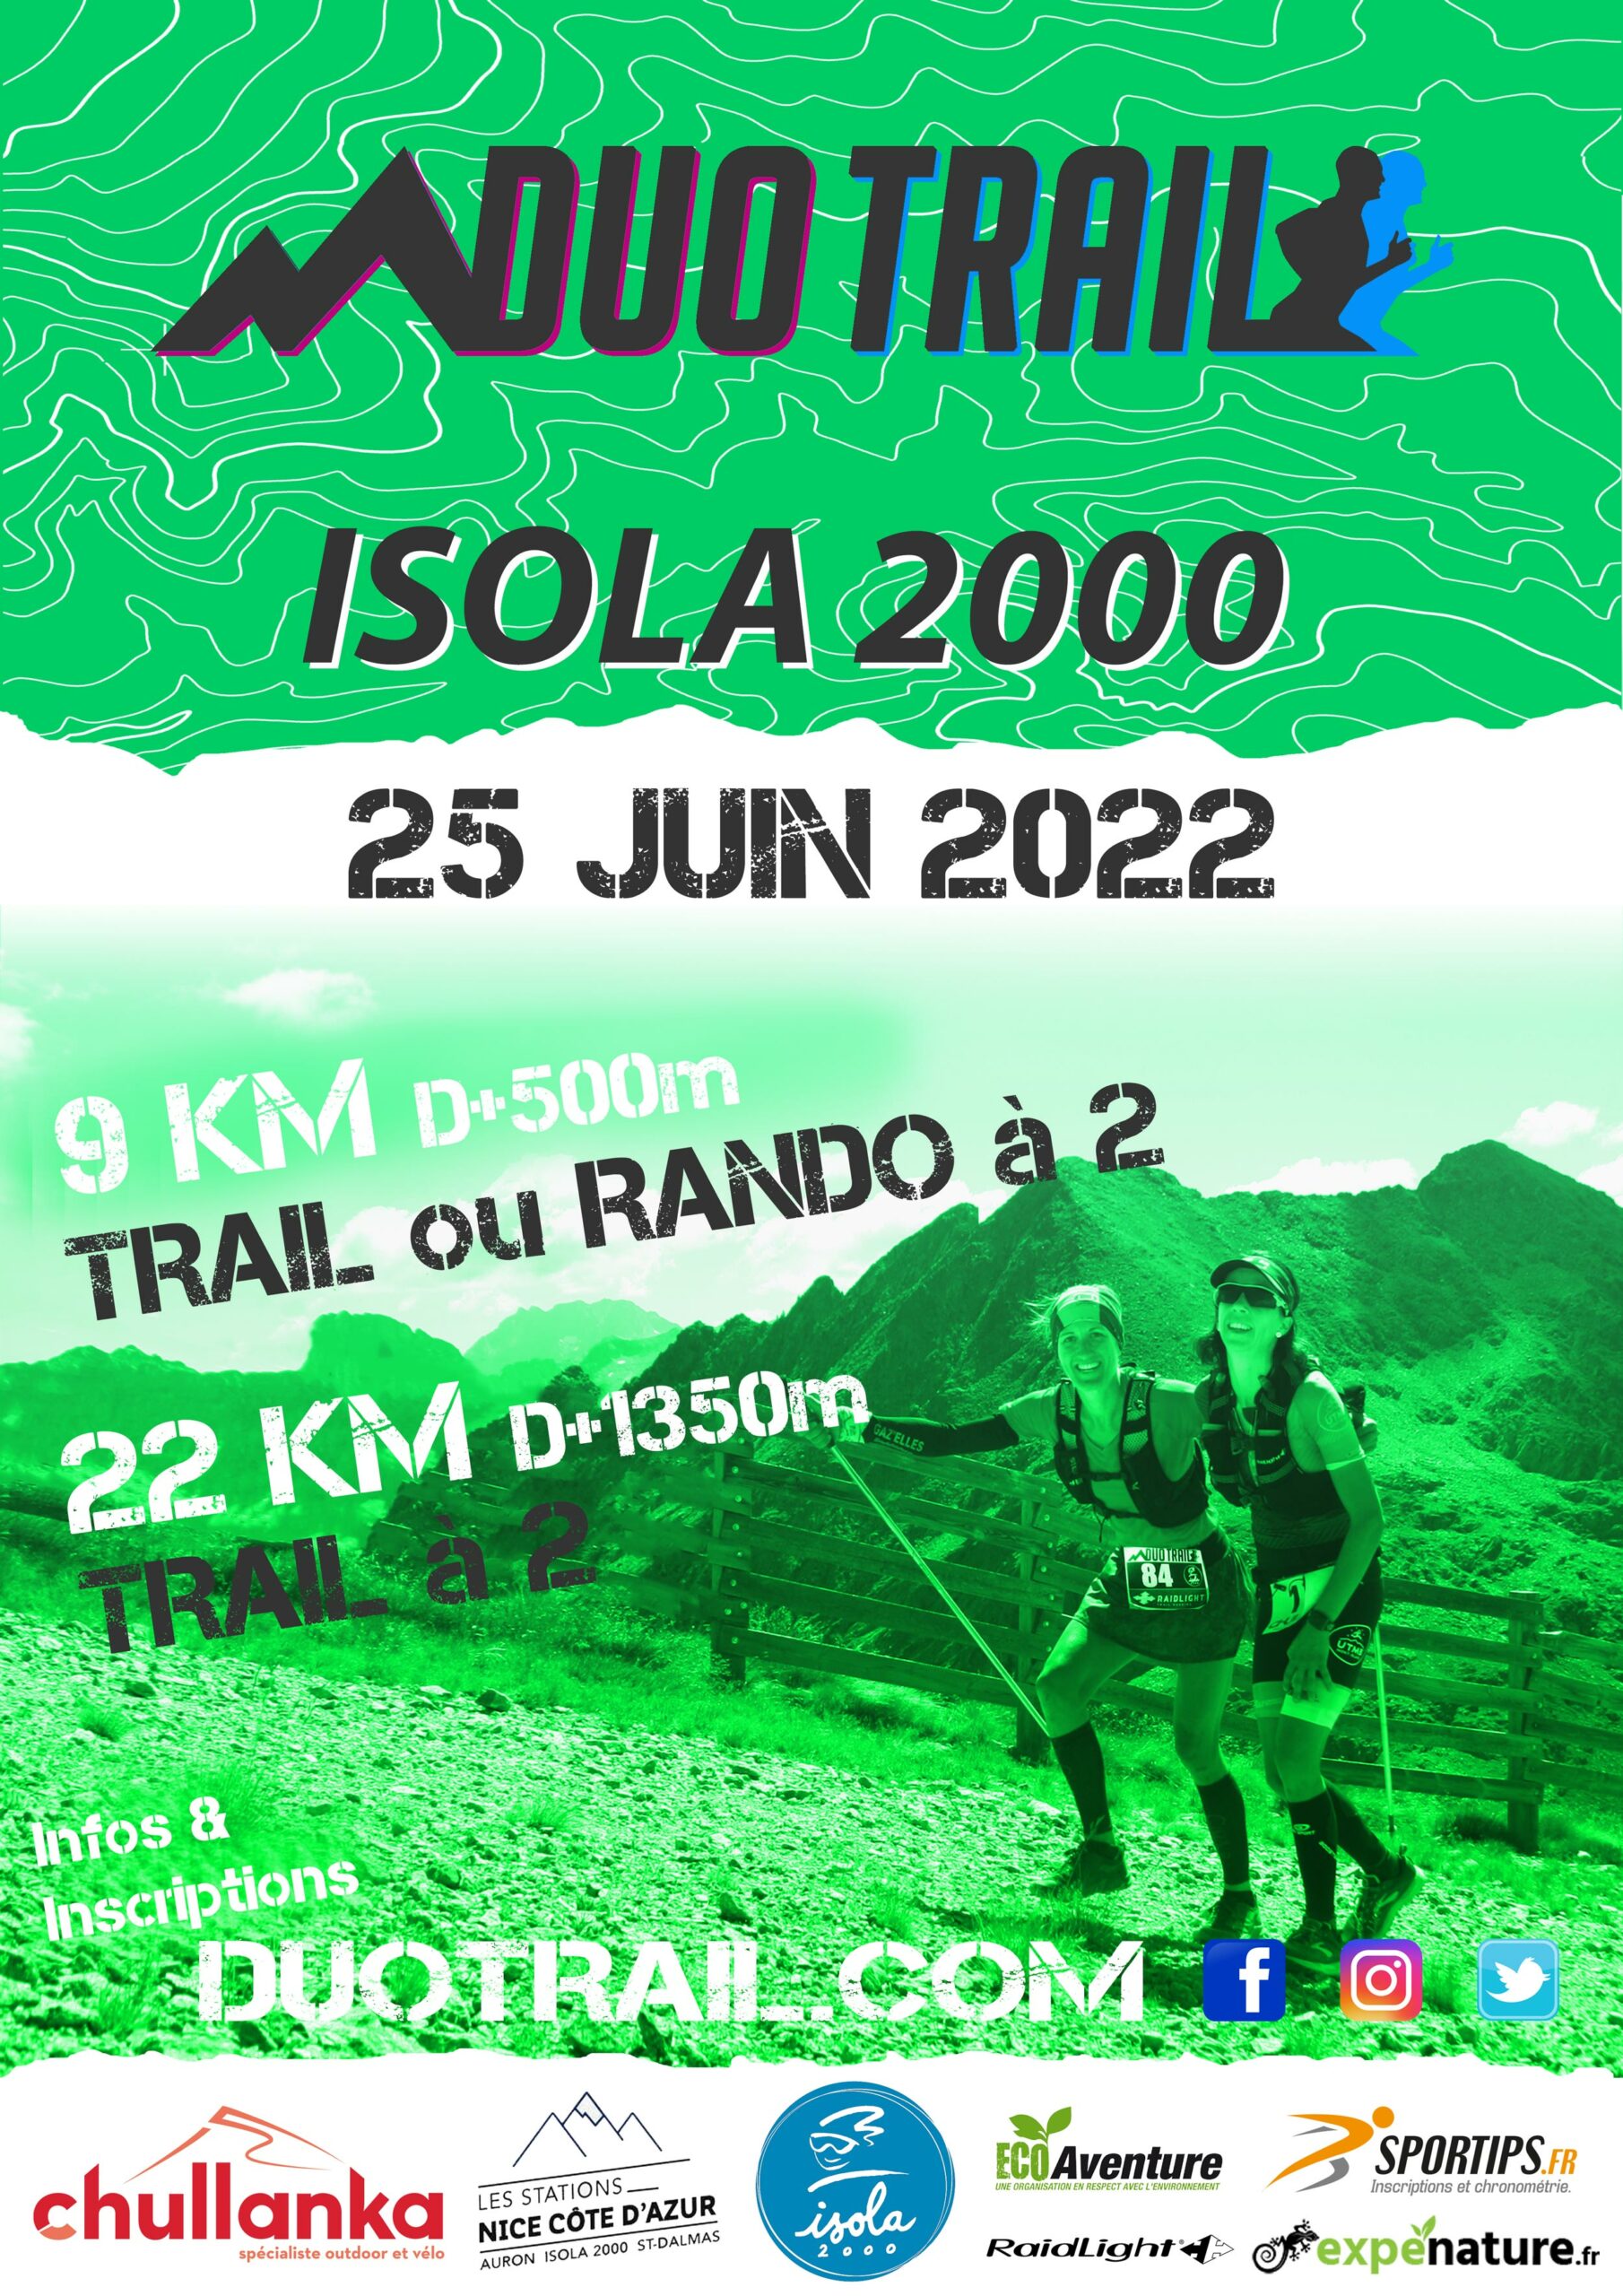 DUO TRAIL® MERCANTOUR | ISOLA 2000